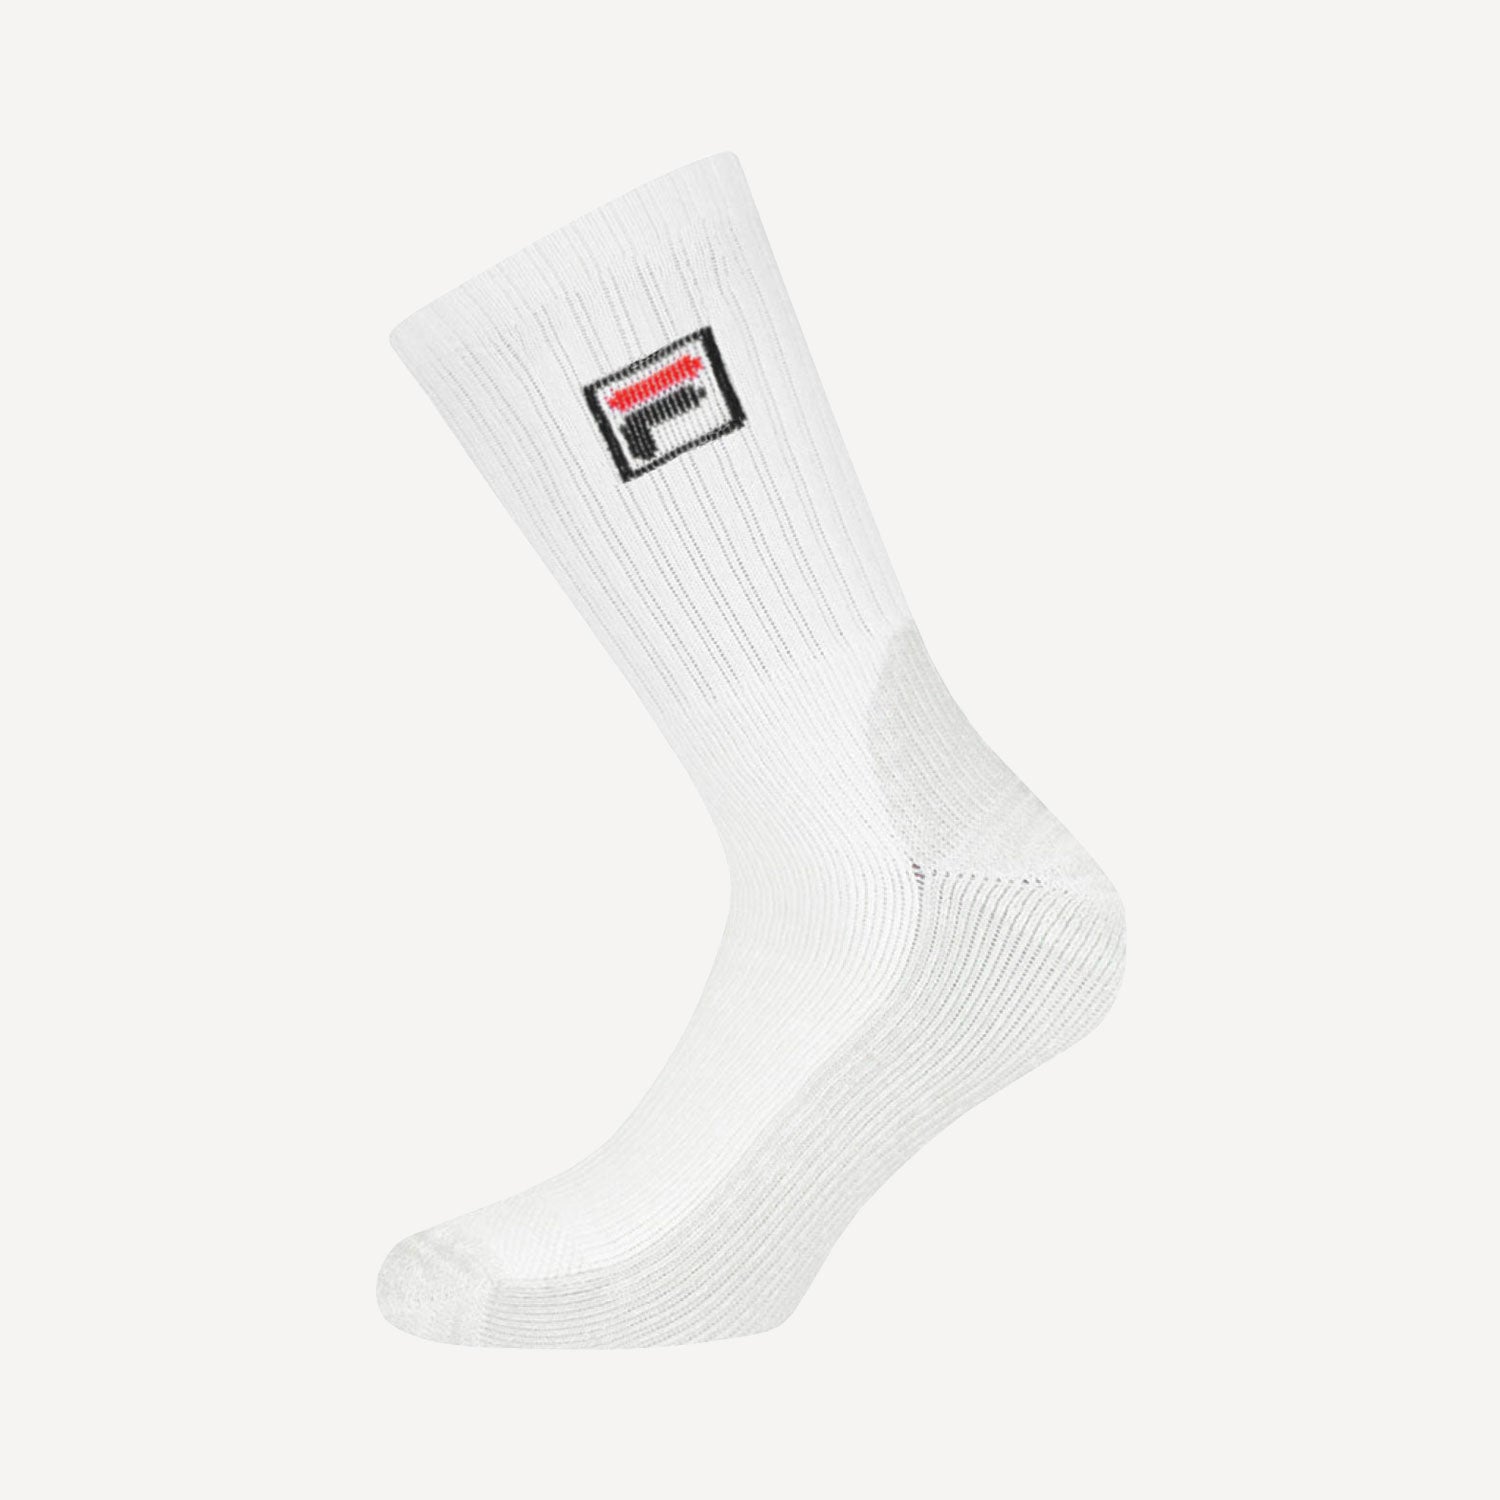 Fila Performance Tennis Socks - White (1)